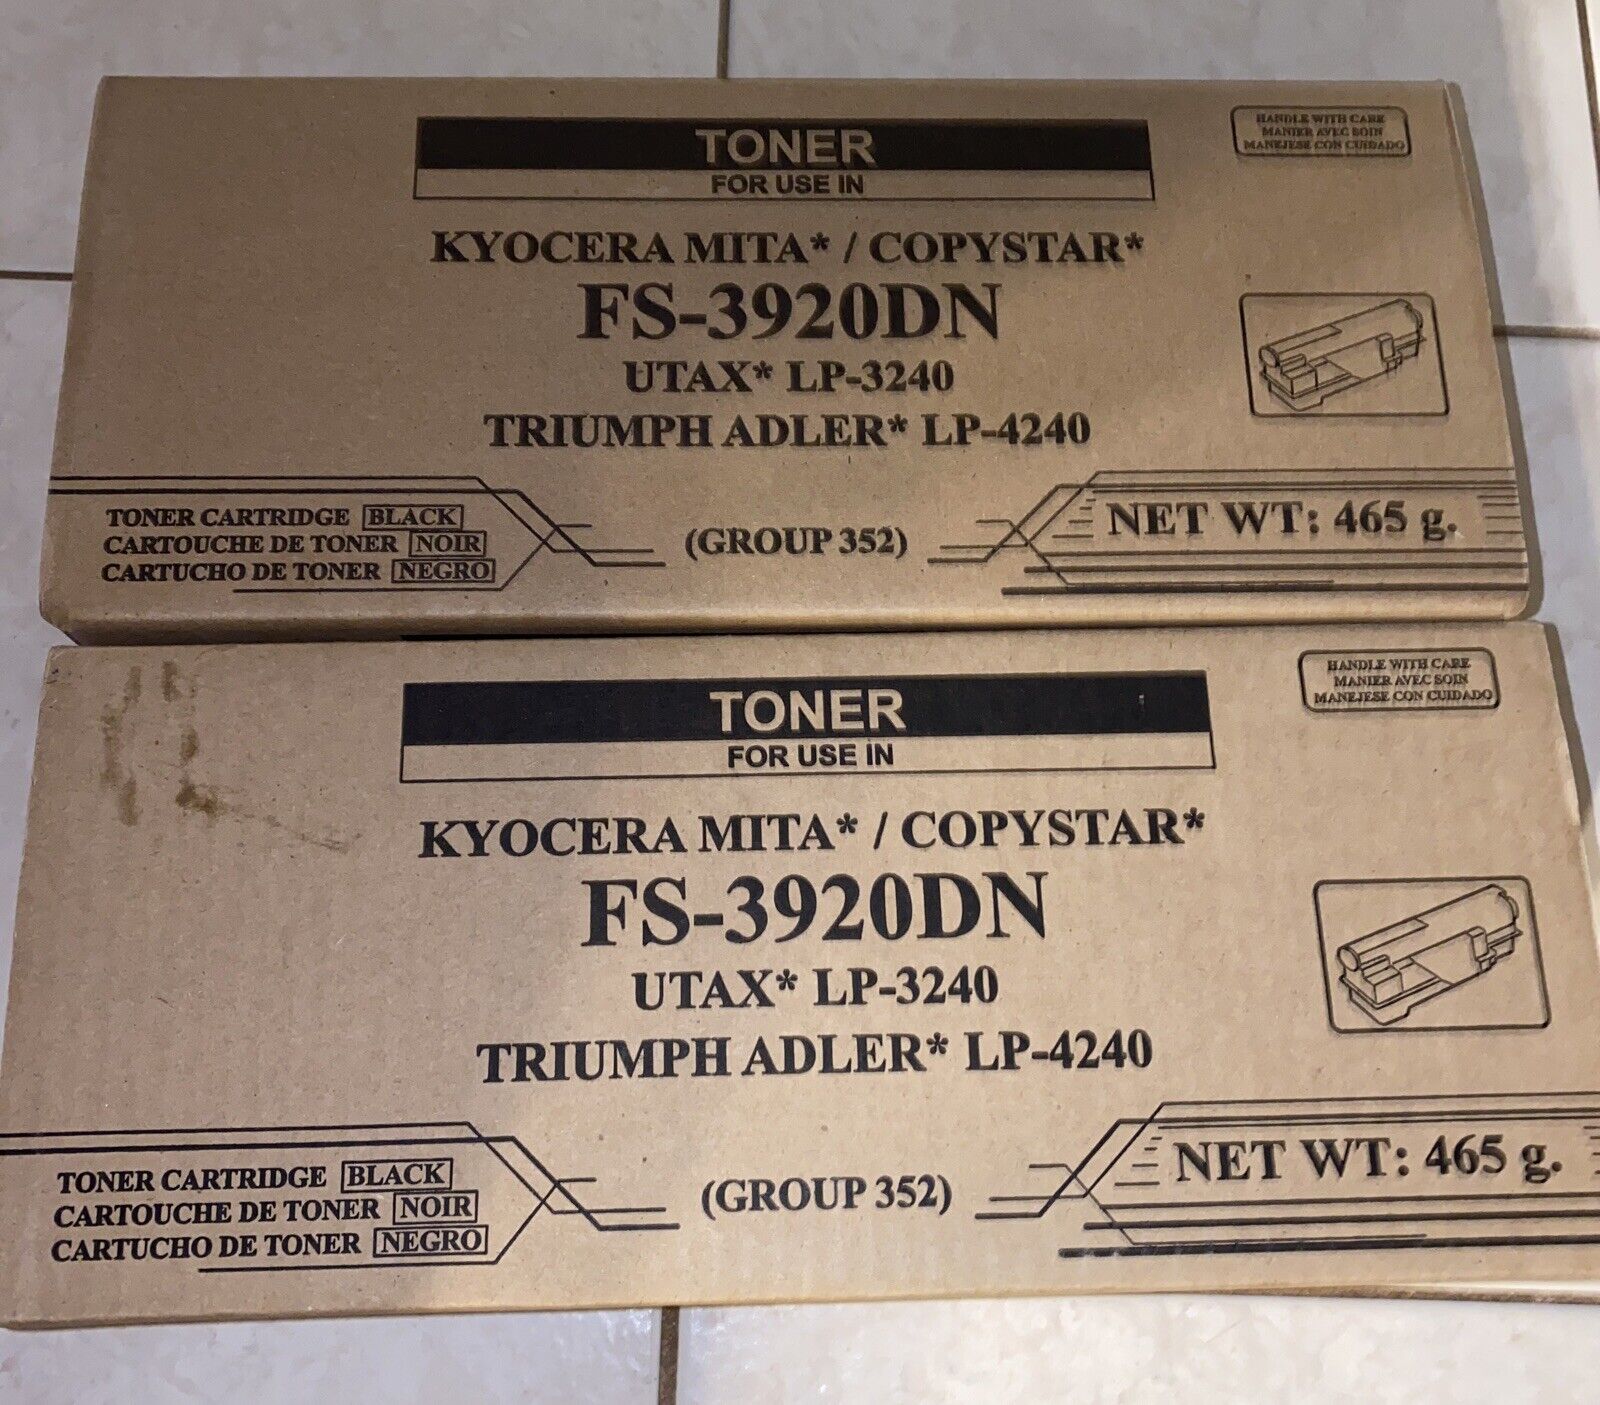 TK-352 Compatible Toner Cartridge for Kyocera-Mita Fits PRINTER FS-3920DN lot 2